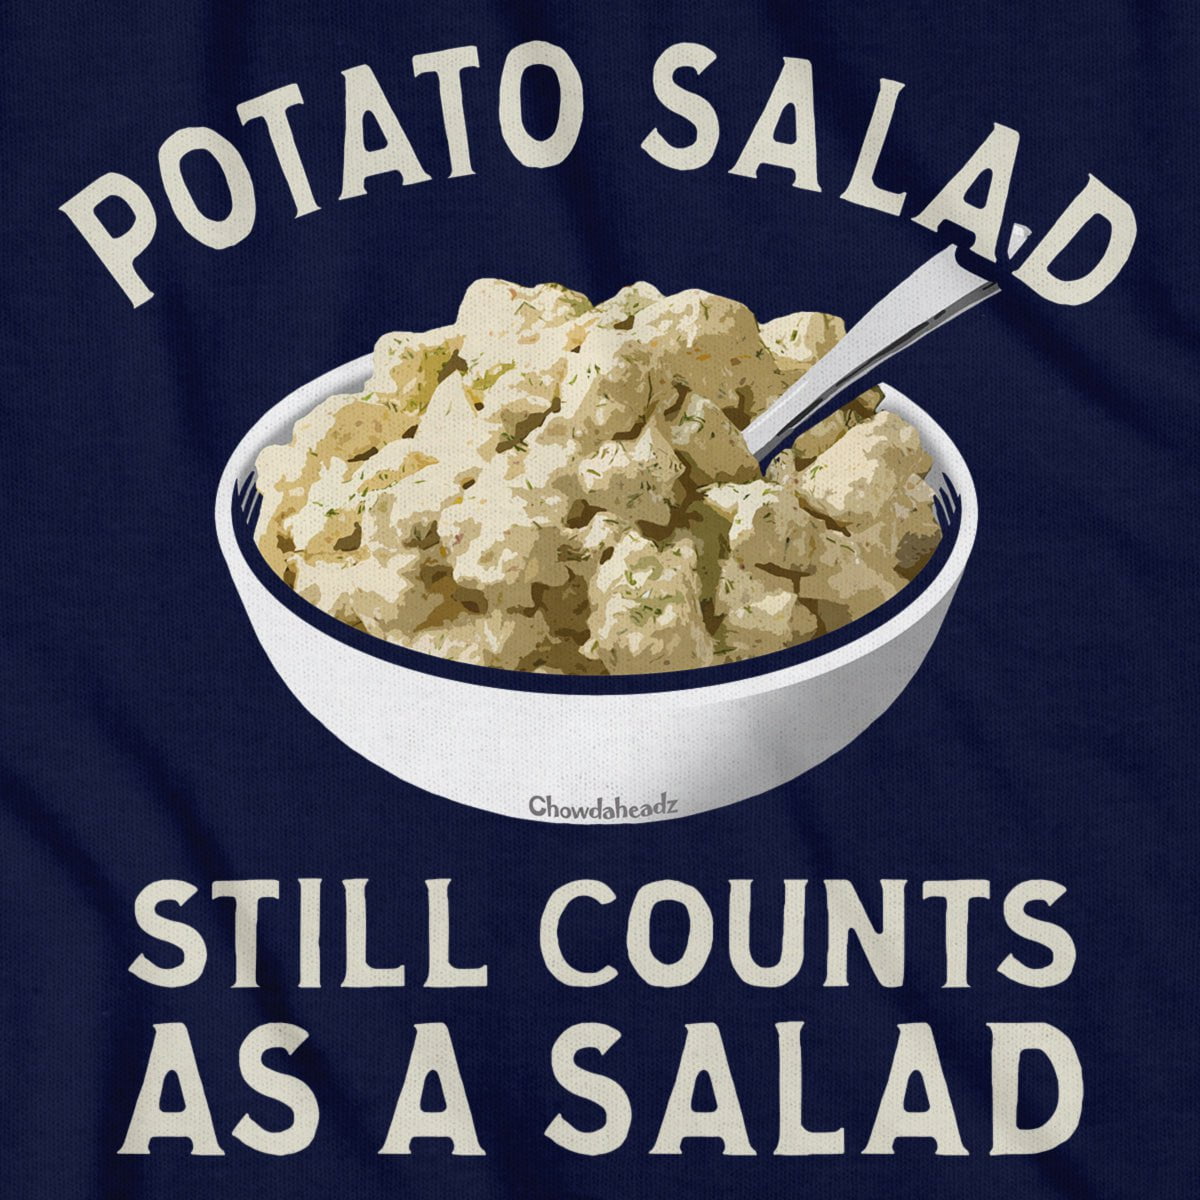 Potato Salad Counts As Salad T-Shirt - Chowdaheadz